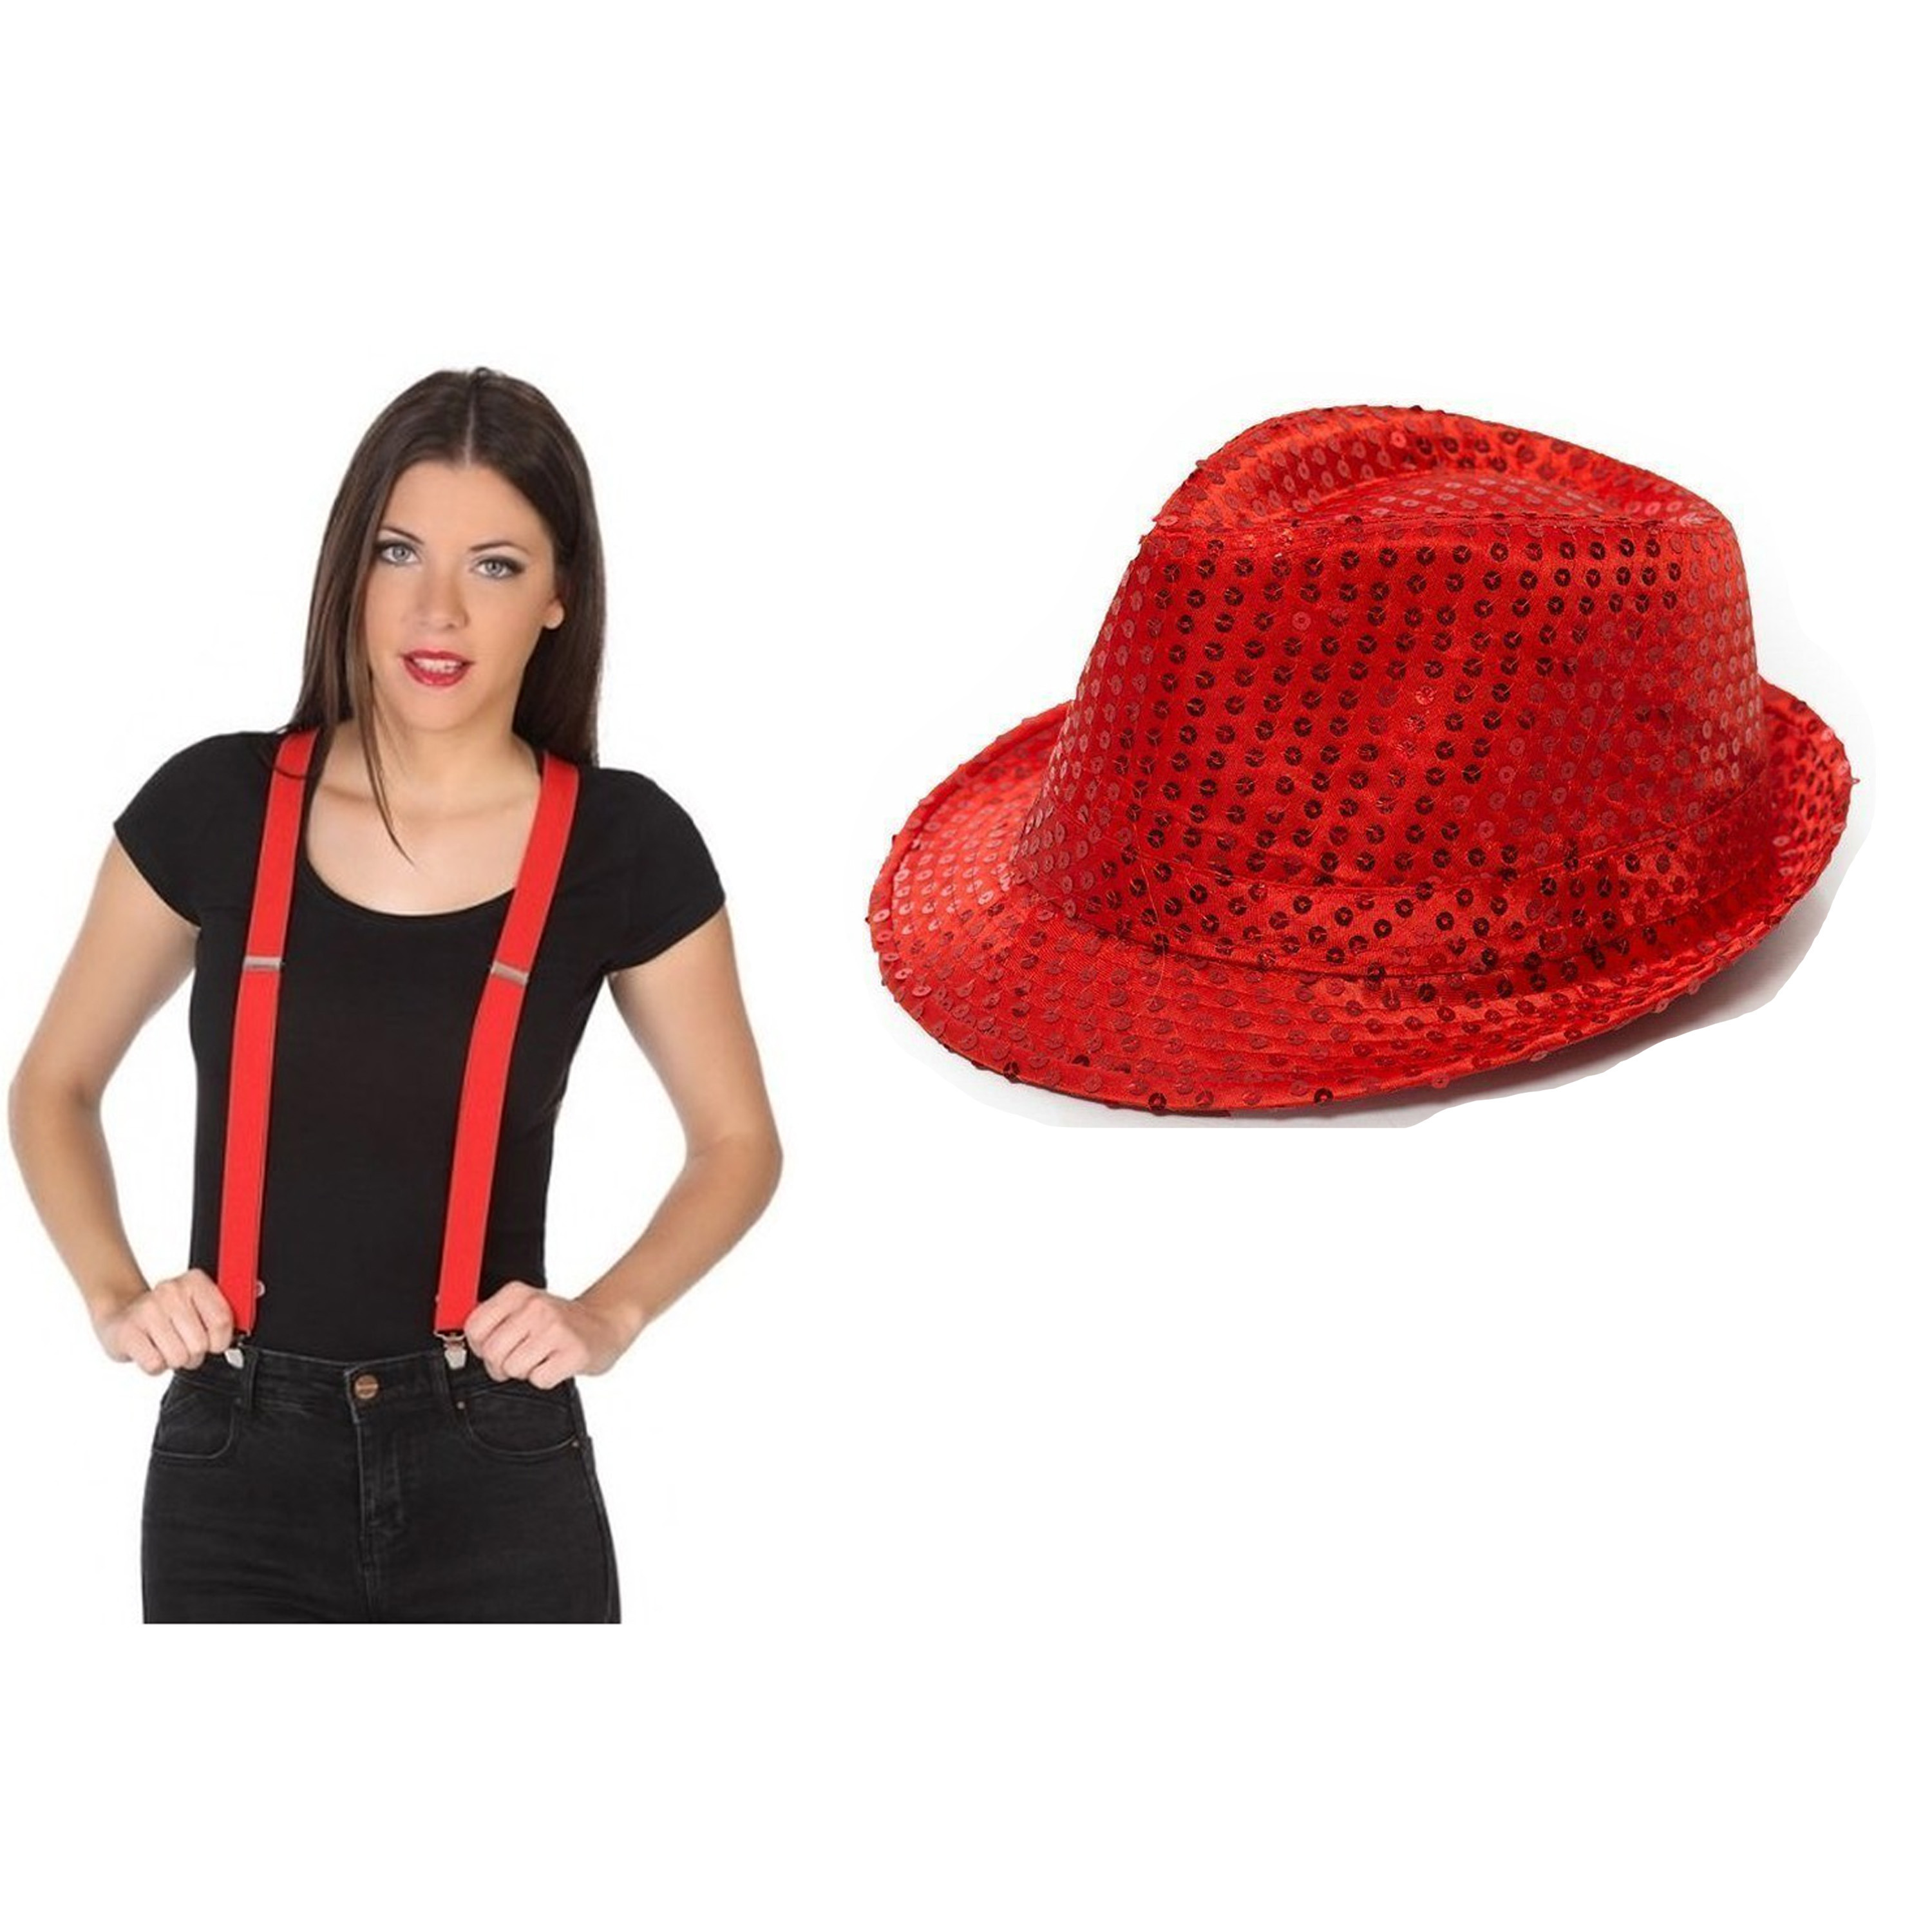 Toppers Carnaval verkleed set glitter hoed en bretels rood